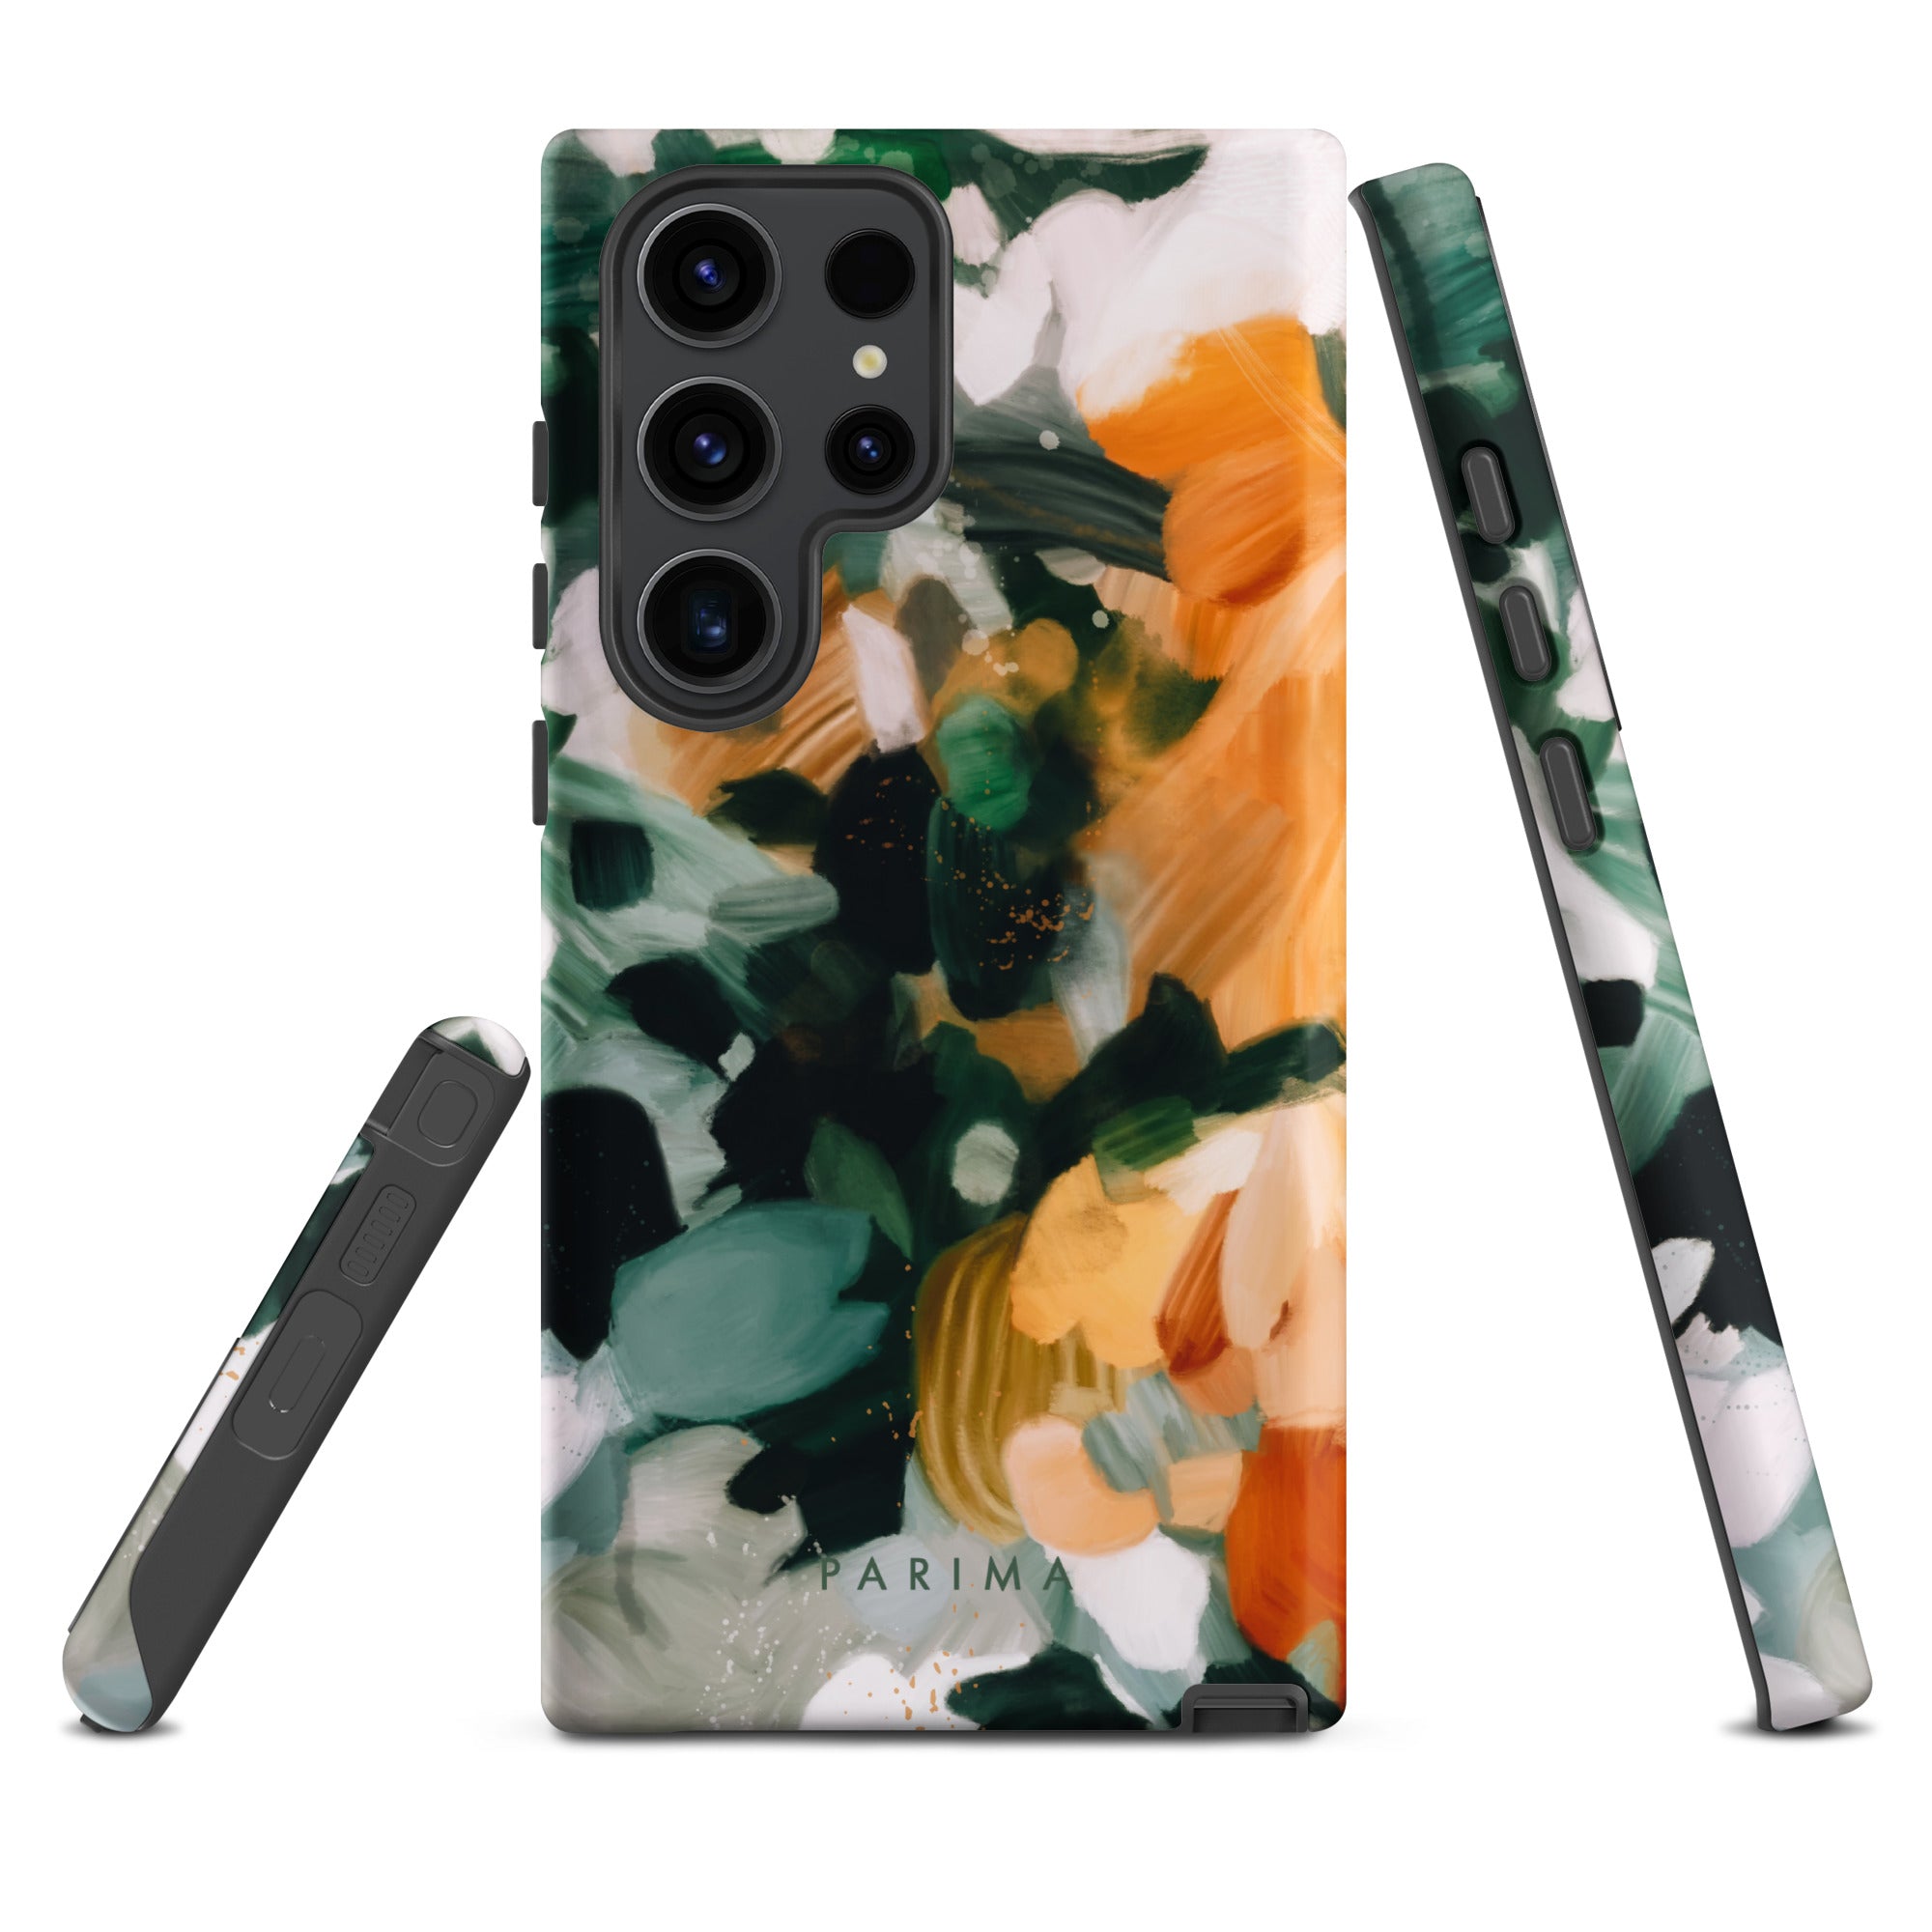 Aspen, green and orange abstract art on Samsung Galaxy S23 Ultra tough case by Parima Studio